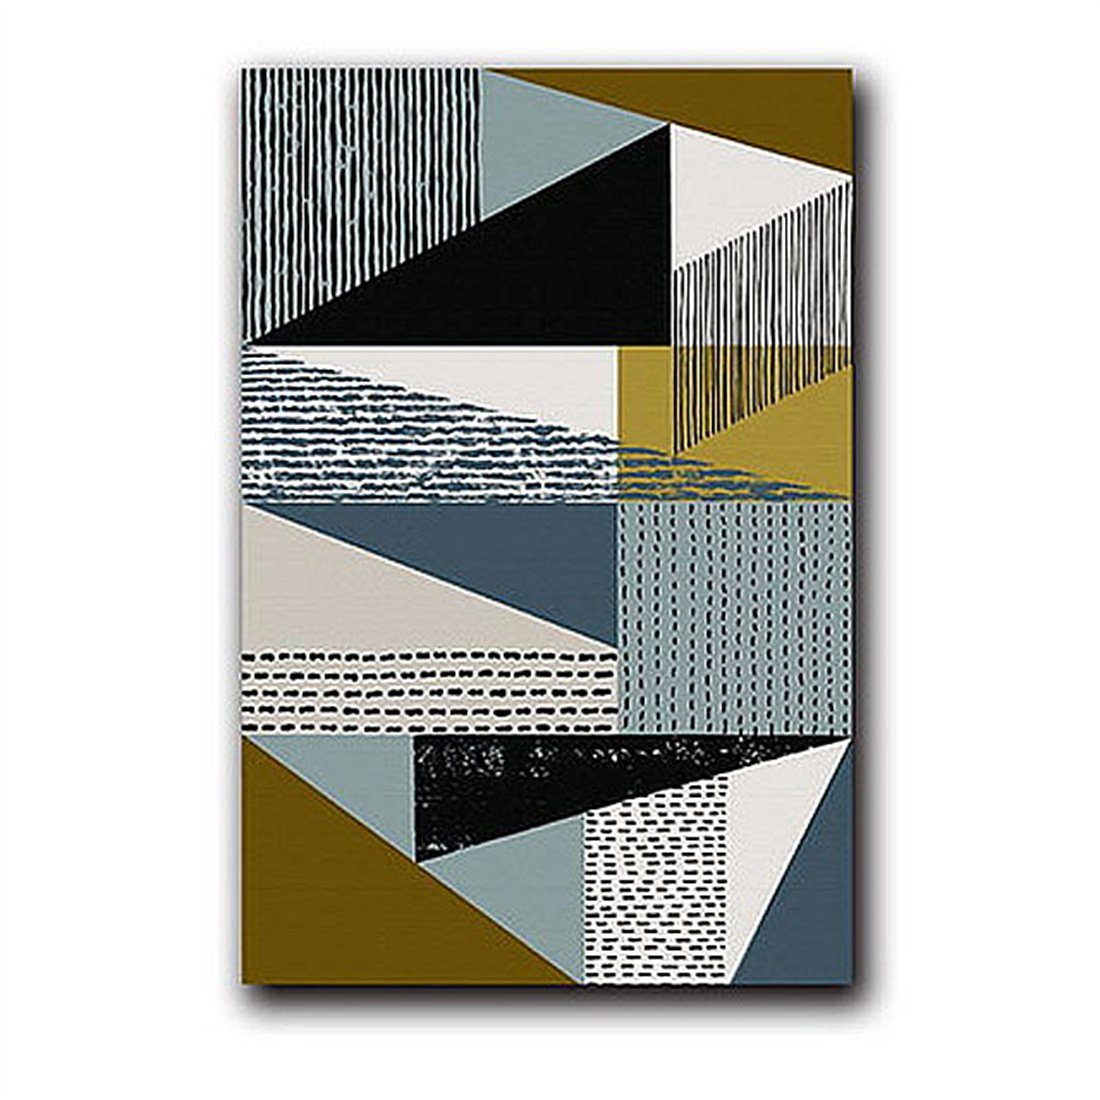 HOPPO~ Wandbild 3 dekorative Einsätze geometrische ungerahmte Bildeinsätze,farbenfrohe